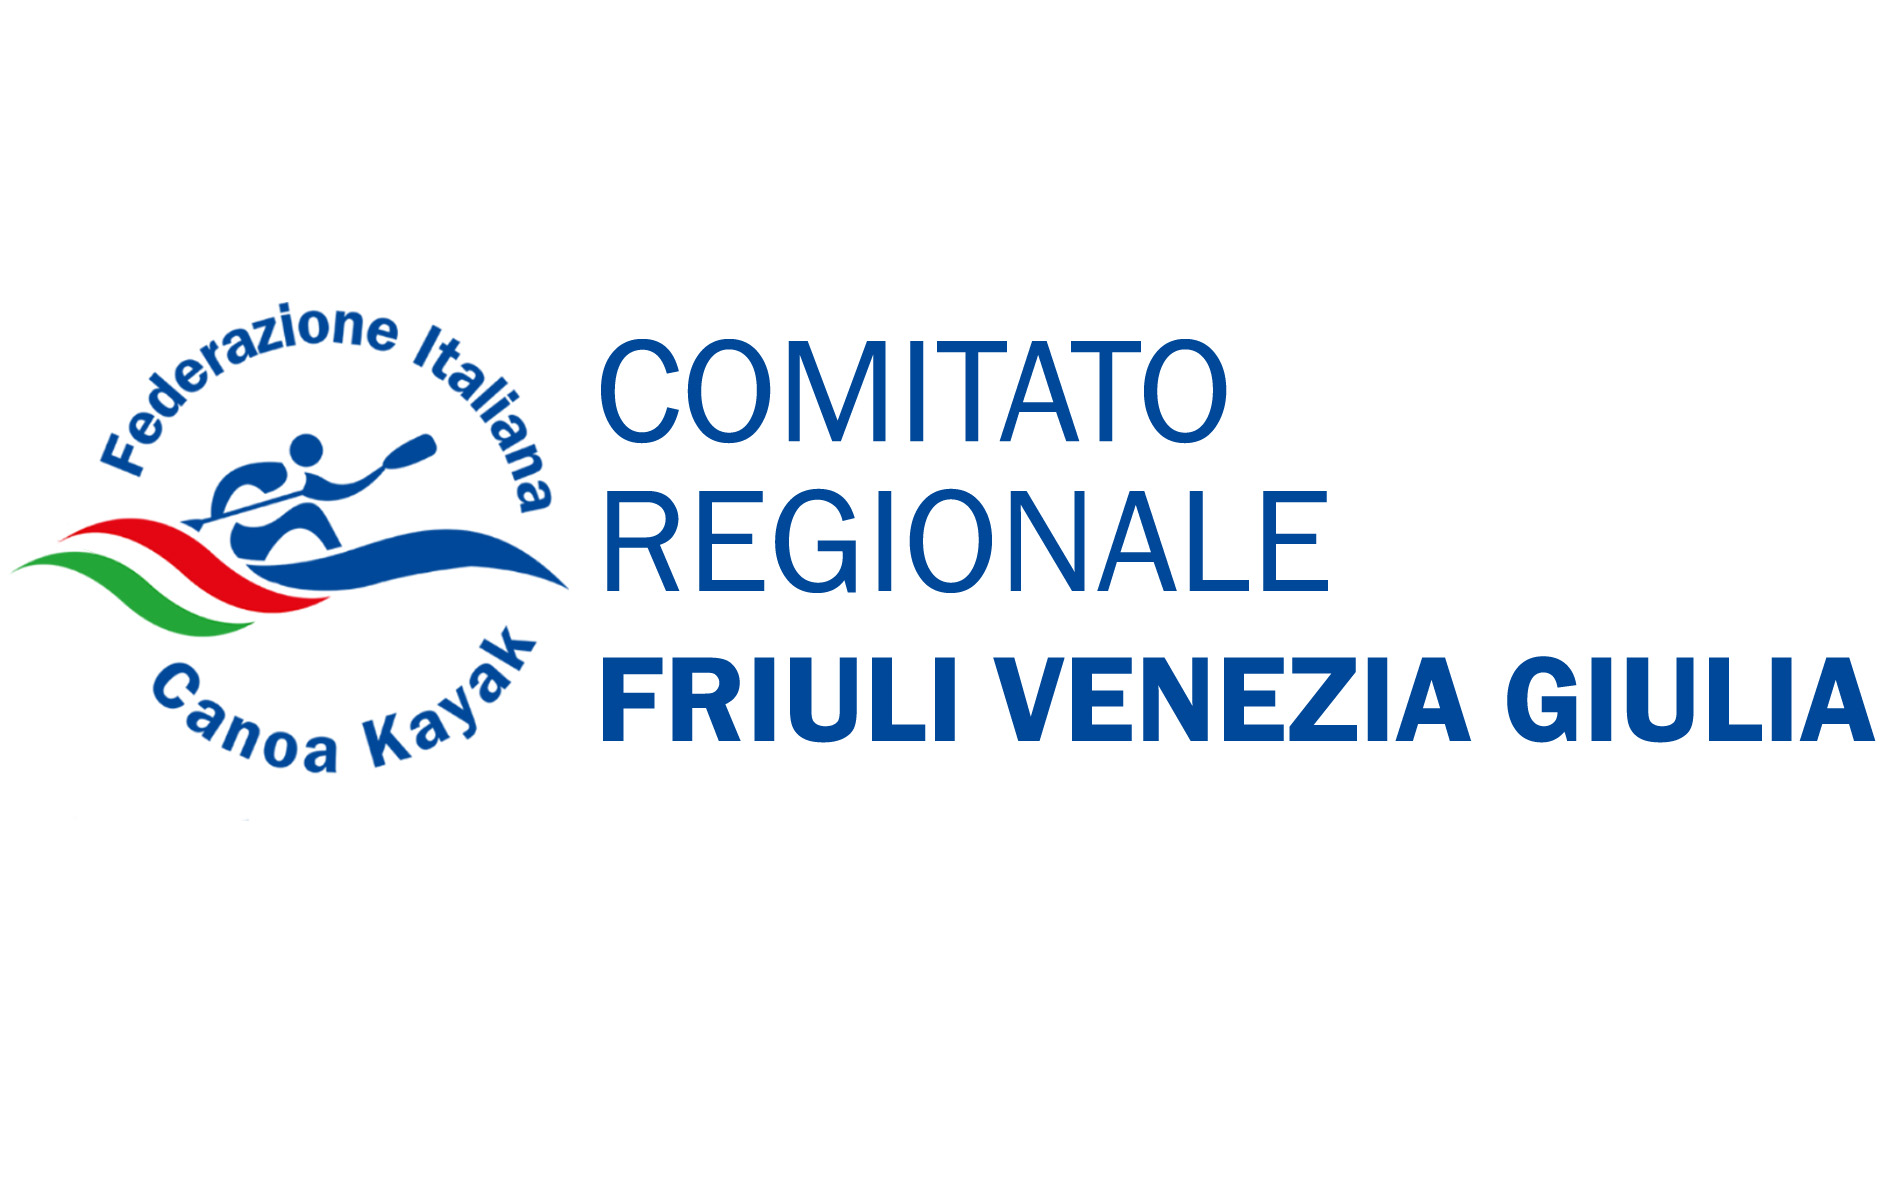 images/comitatiregionali/friuli/FriuliVeneziaGiulia_ModA.jpg